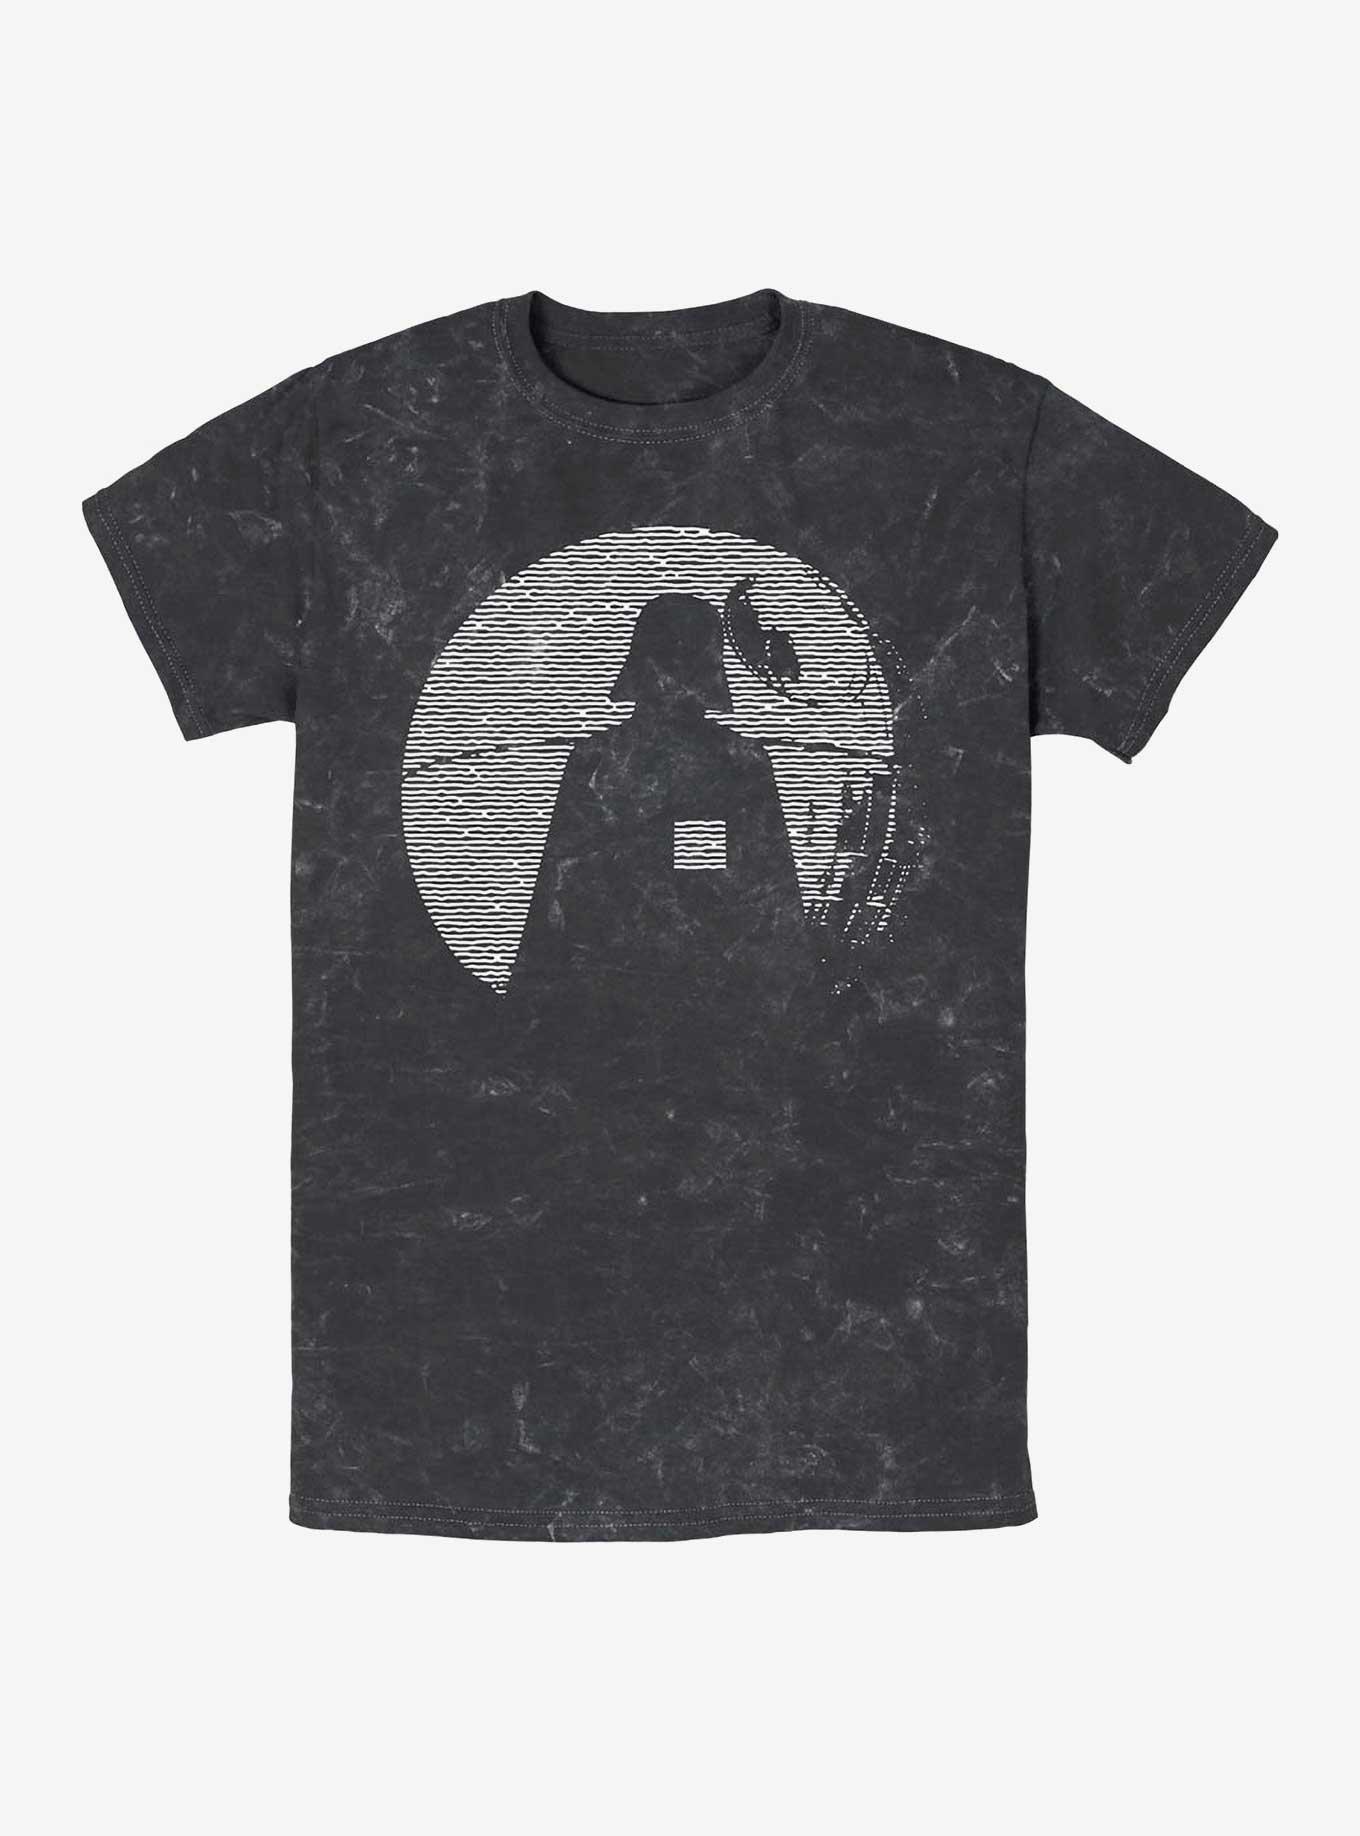 Star Wars Sith Star Mineral Wash T-Shirt, BLACK, hi-res